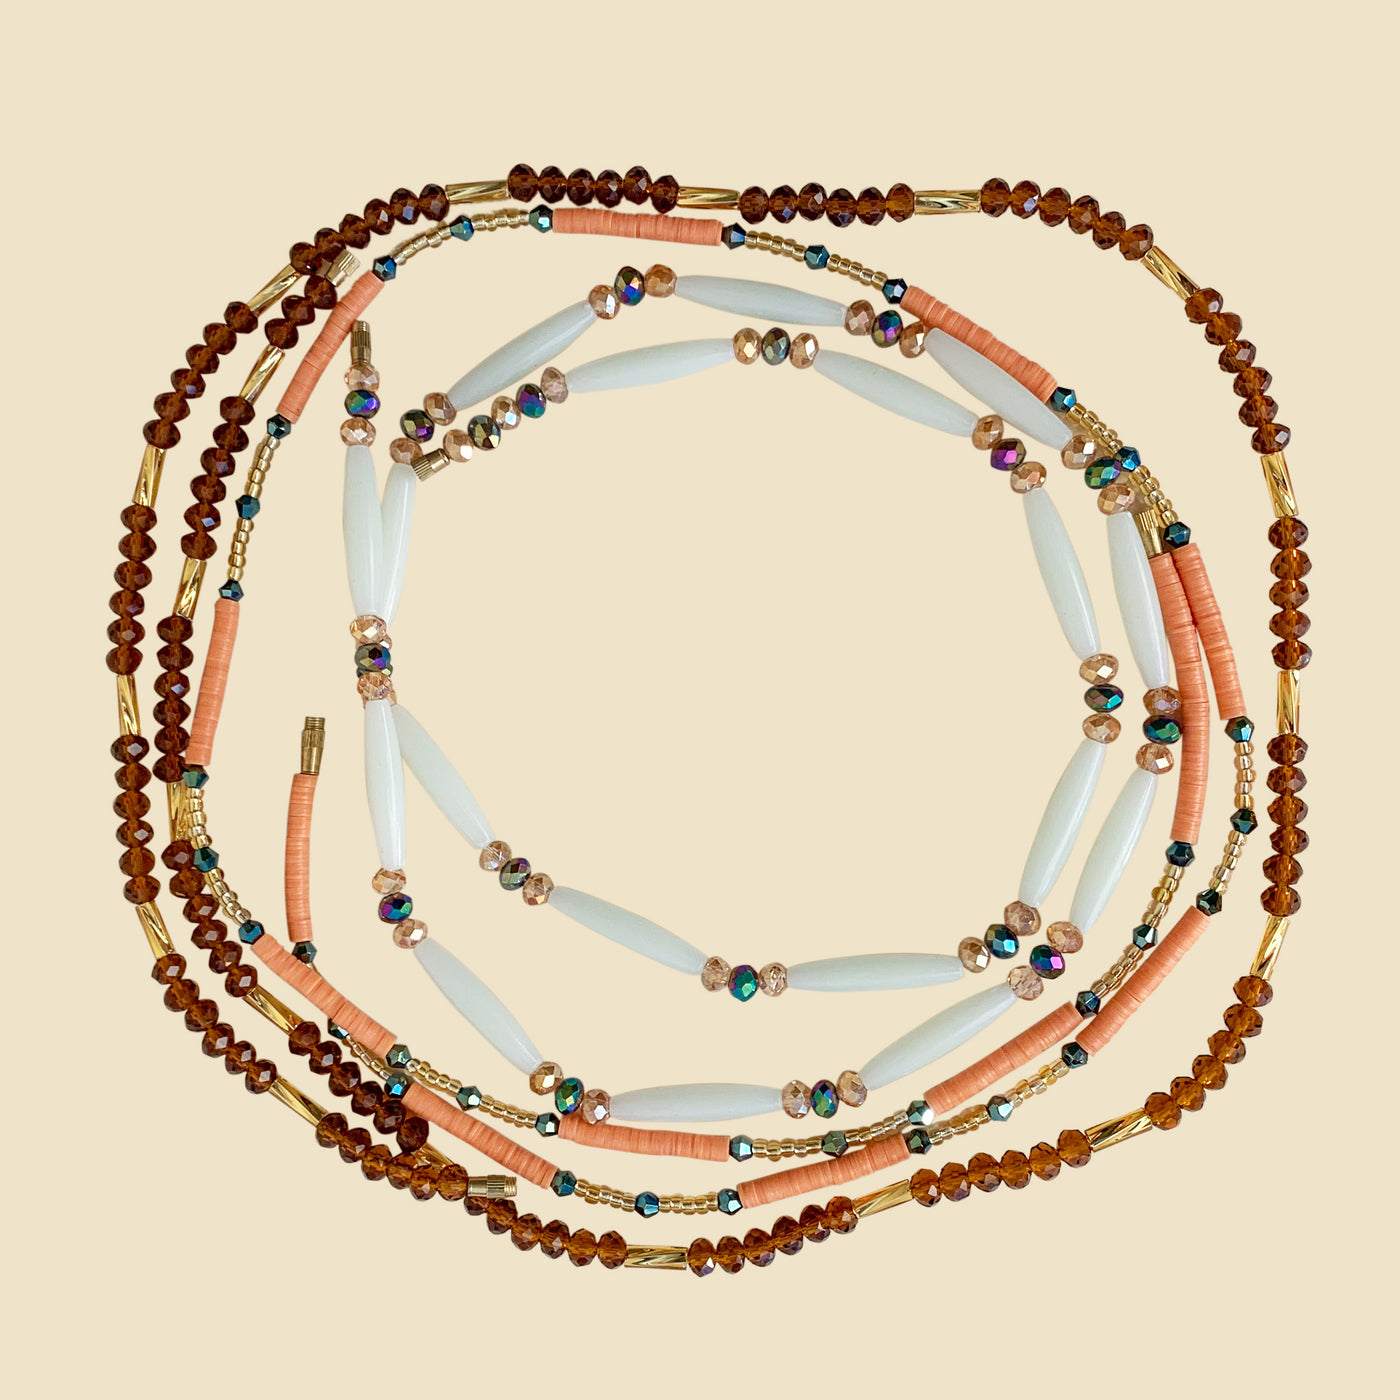 Oshun energy waist beads